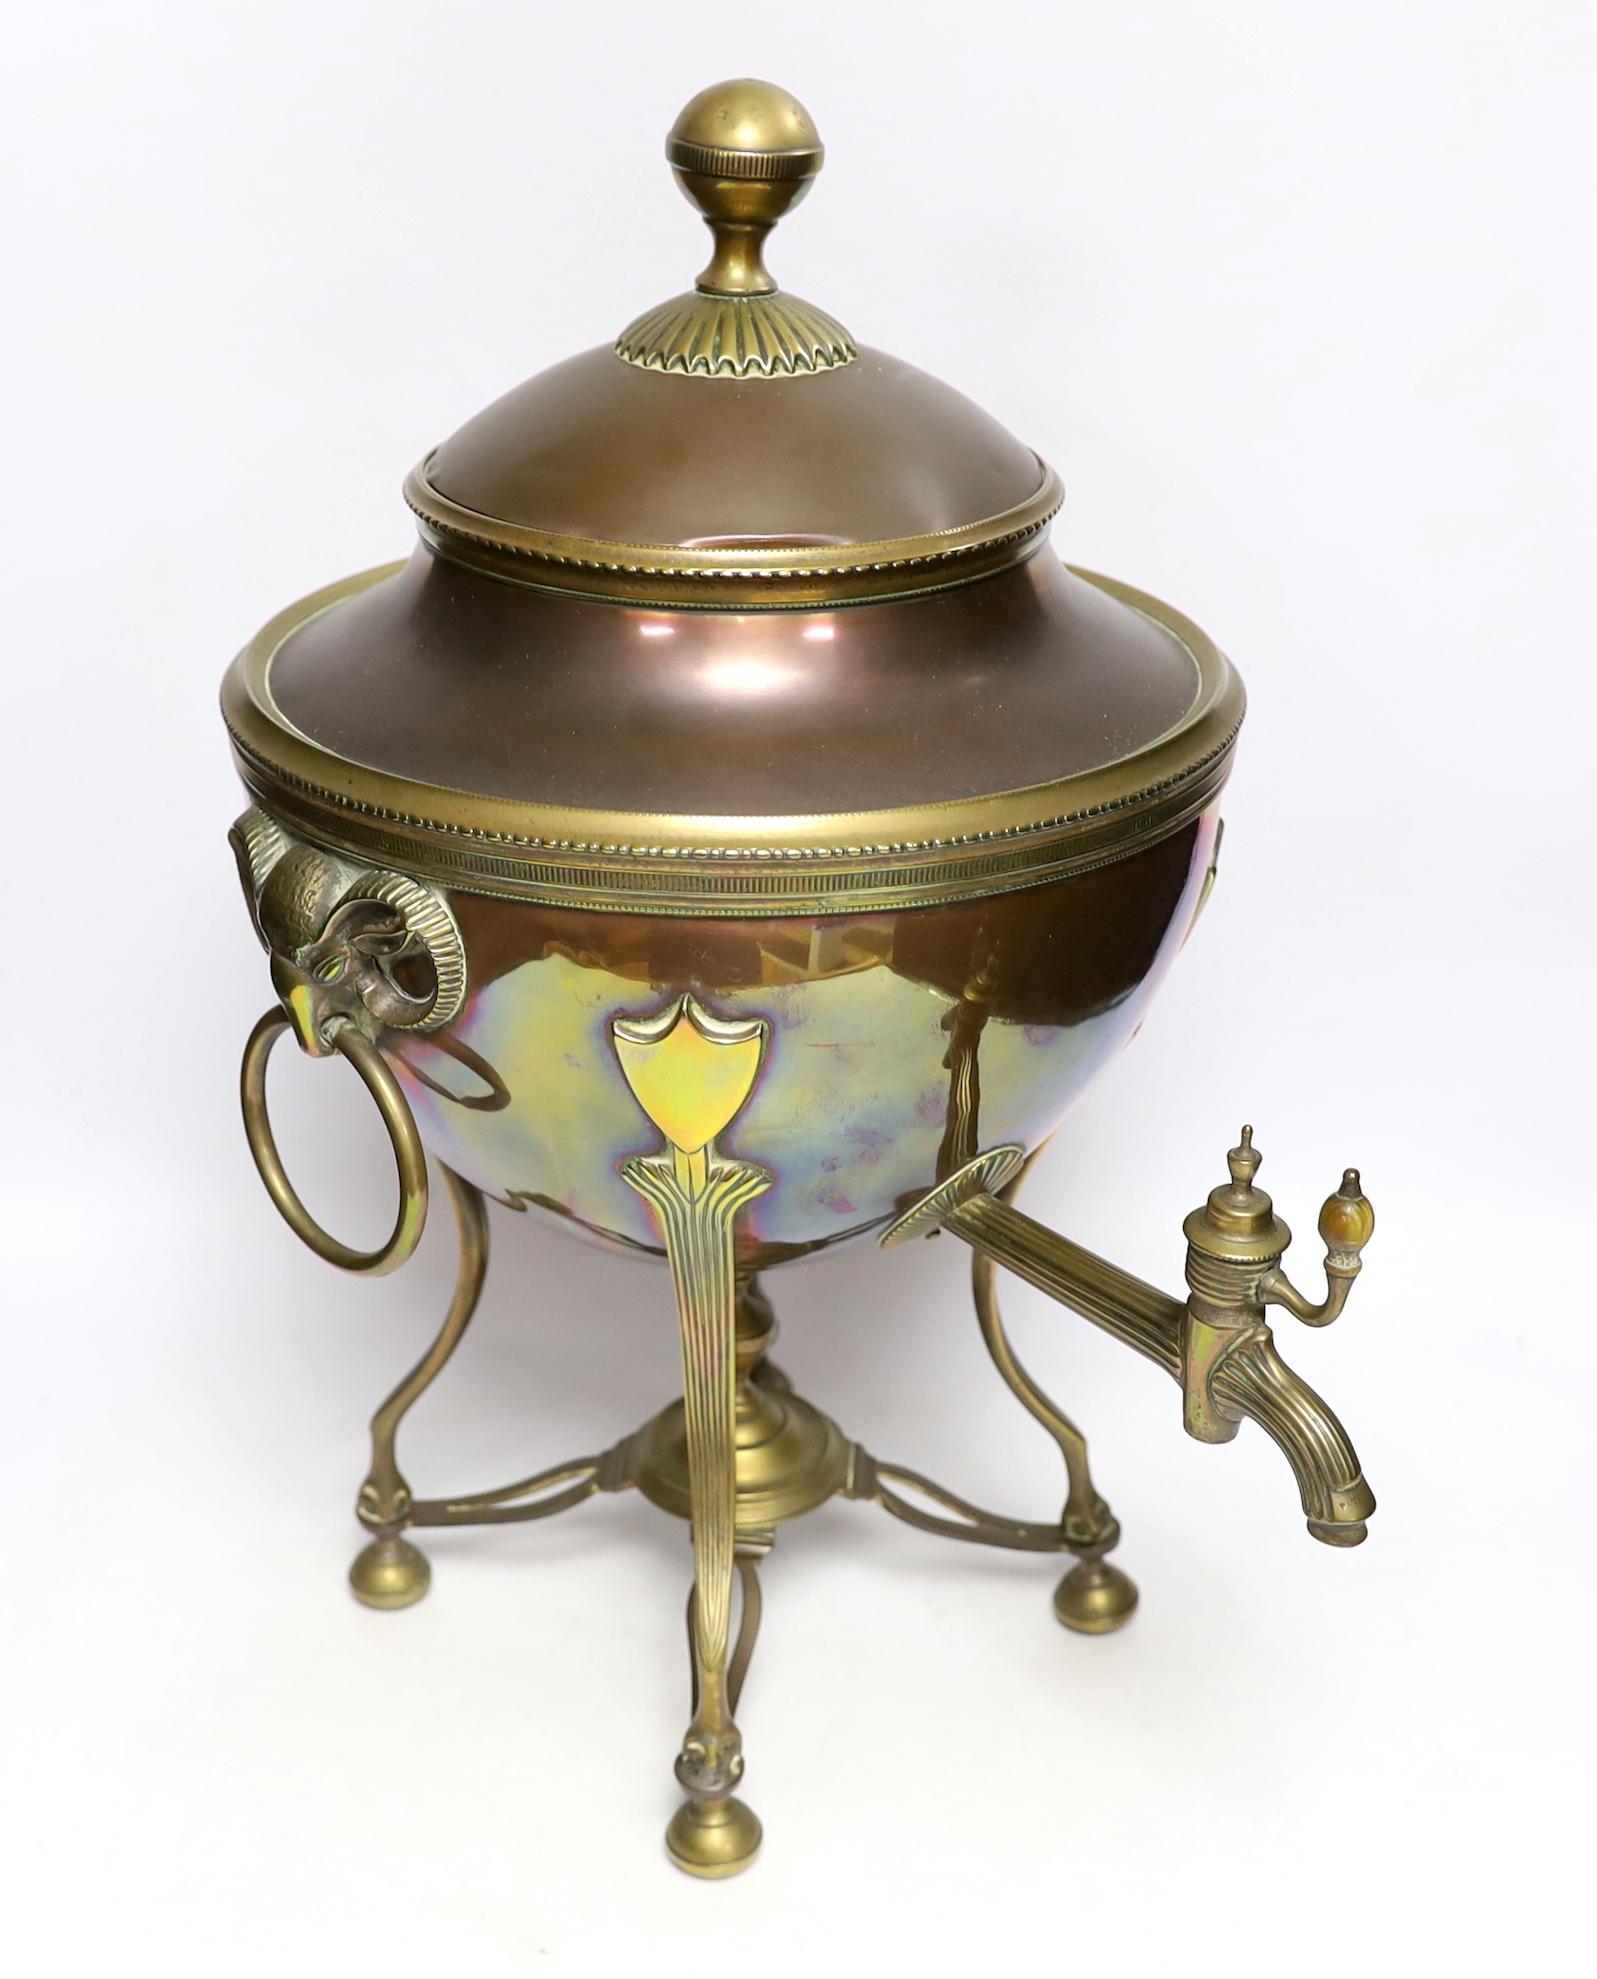 A Regency copper and brass tea urn, 46cm high